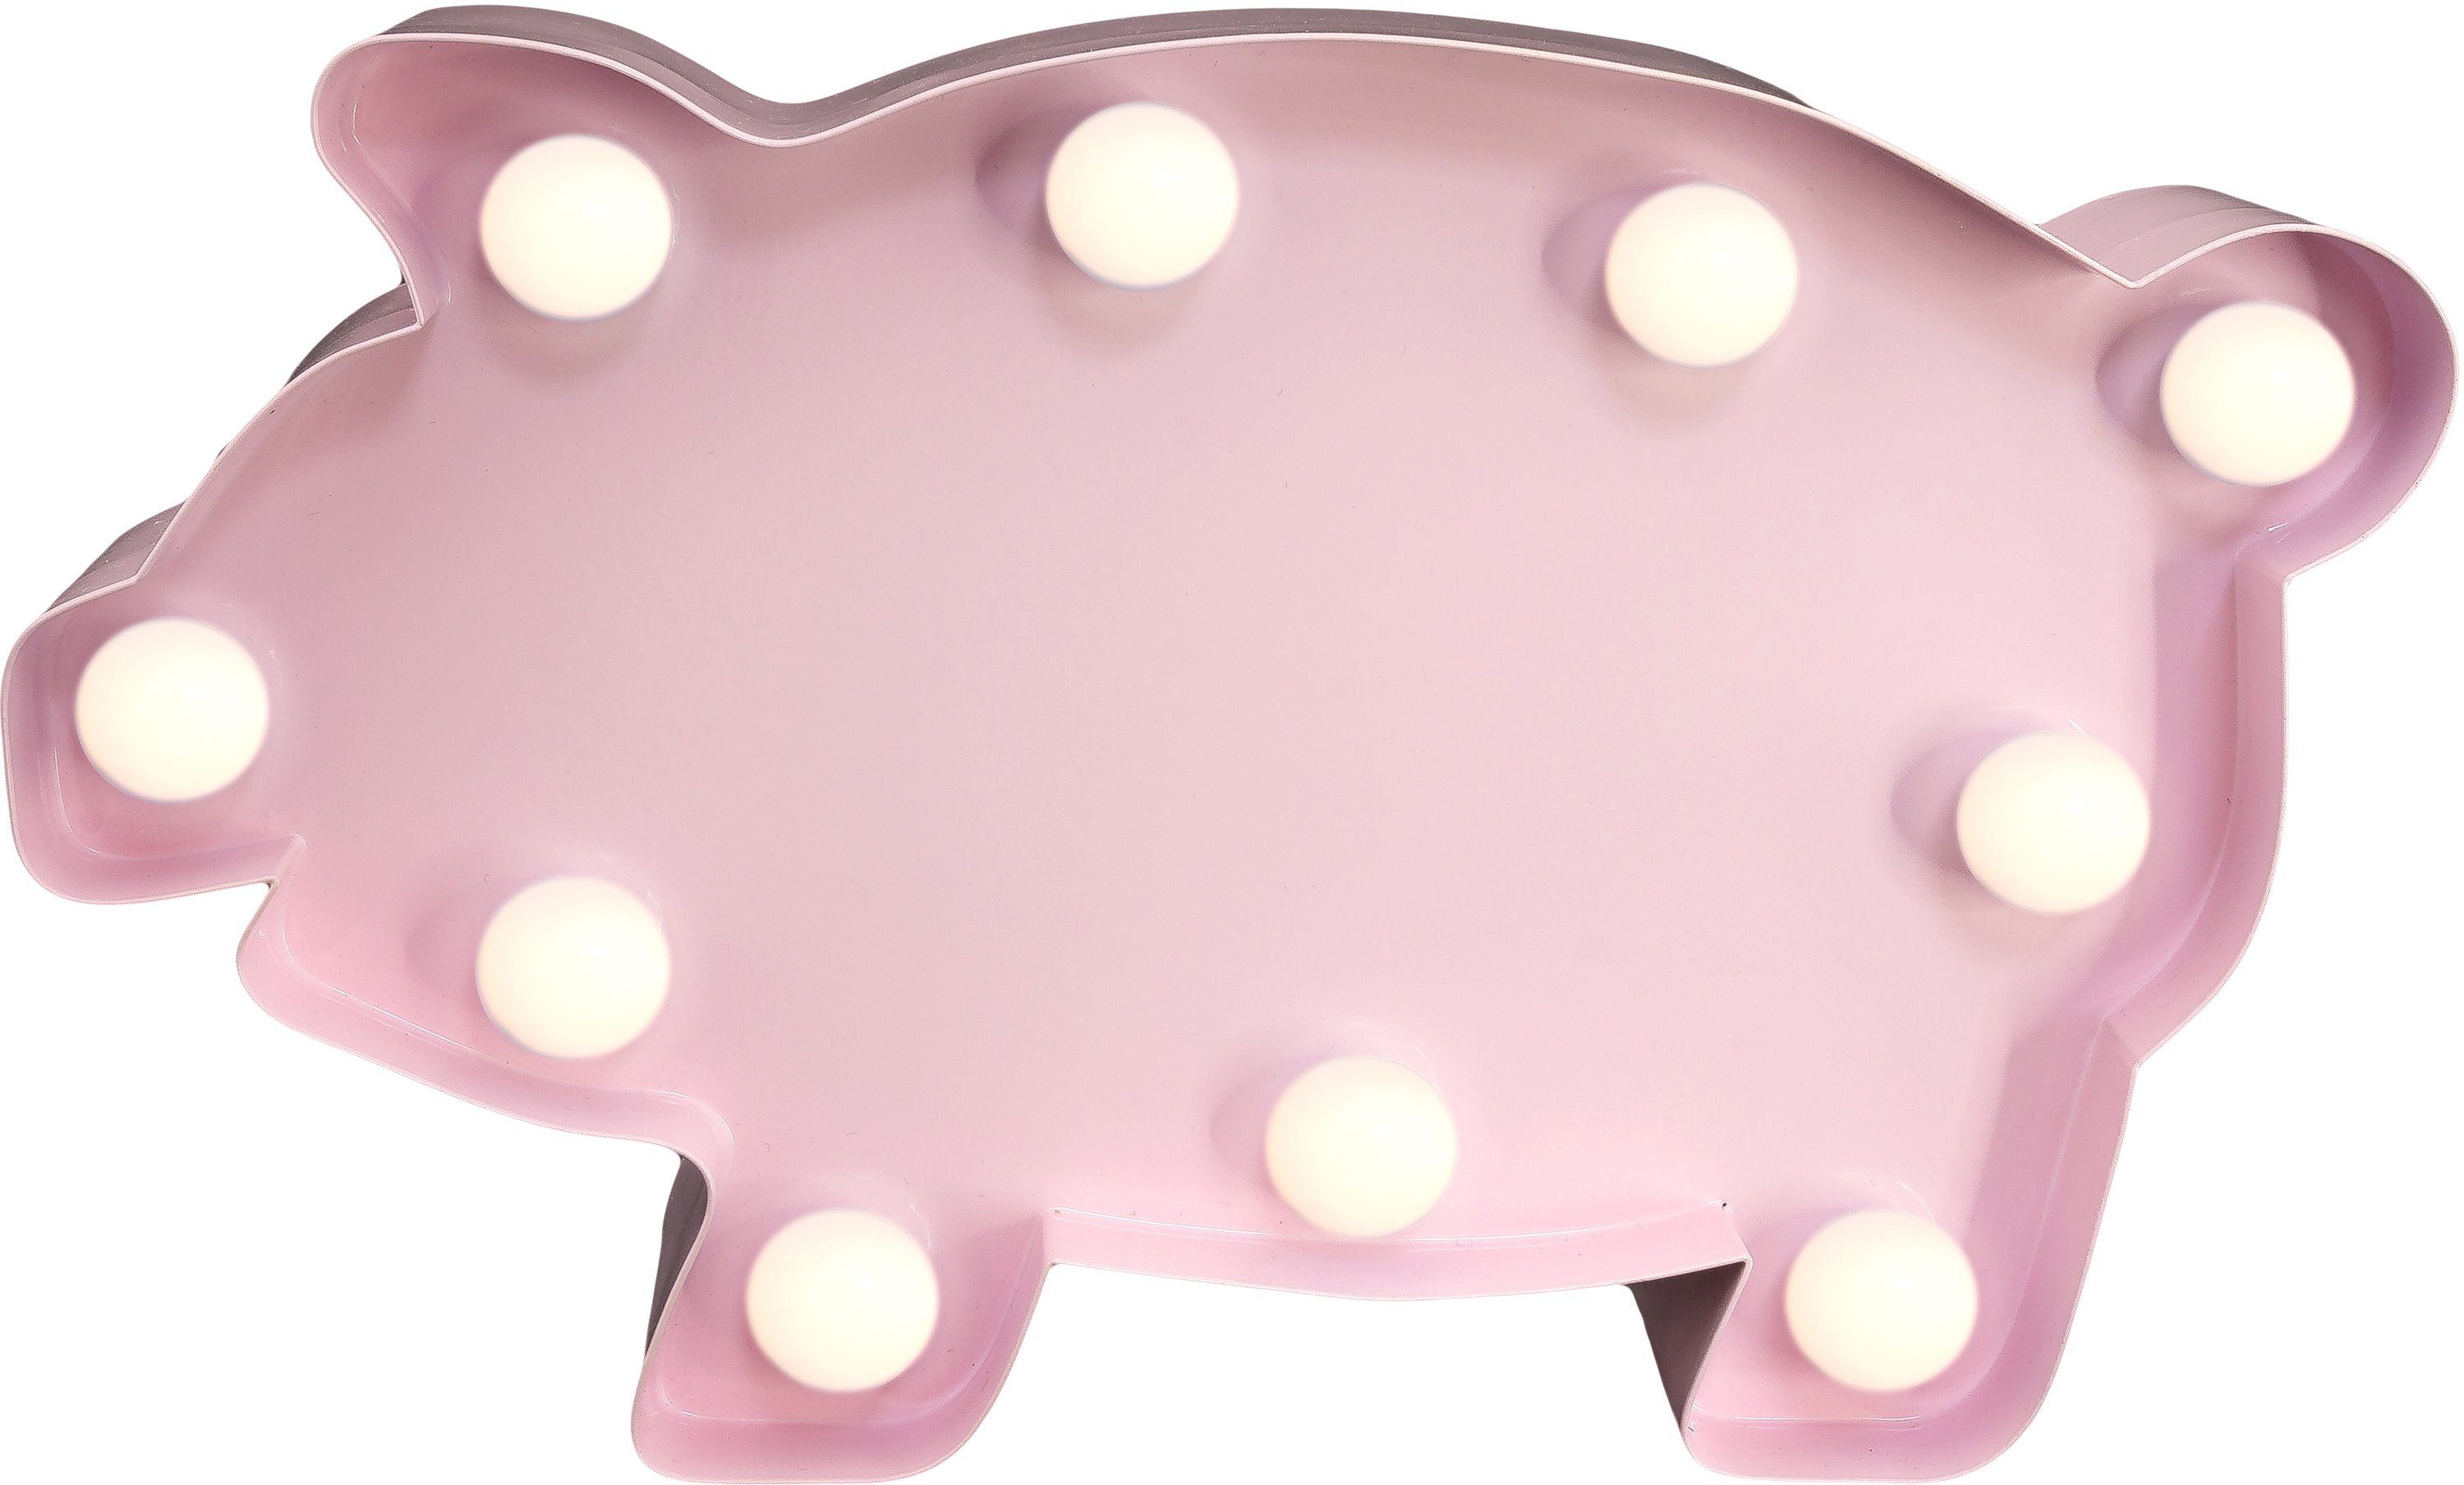 MARQUEE Pig integriert, Wandlampe, 23x14 festverbauten Tischlampe 10 cm mit LED fest Pig, - LEDs LED Warmweiß, Dekolicht LIGHTS